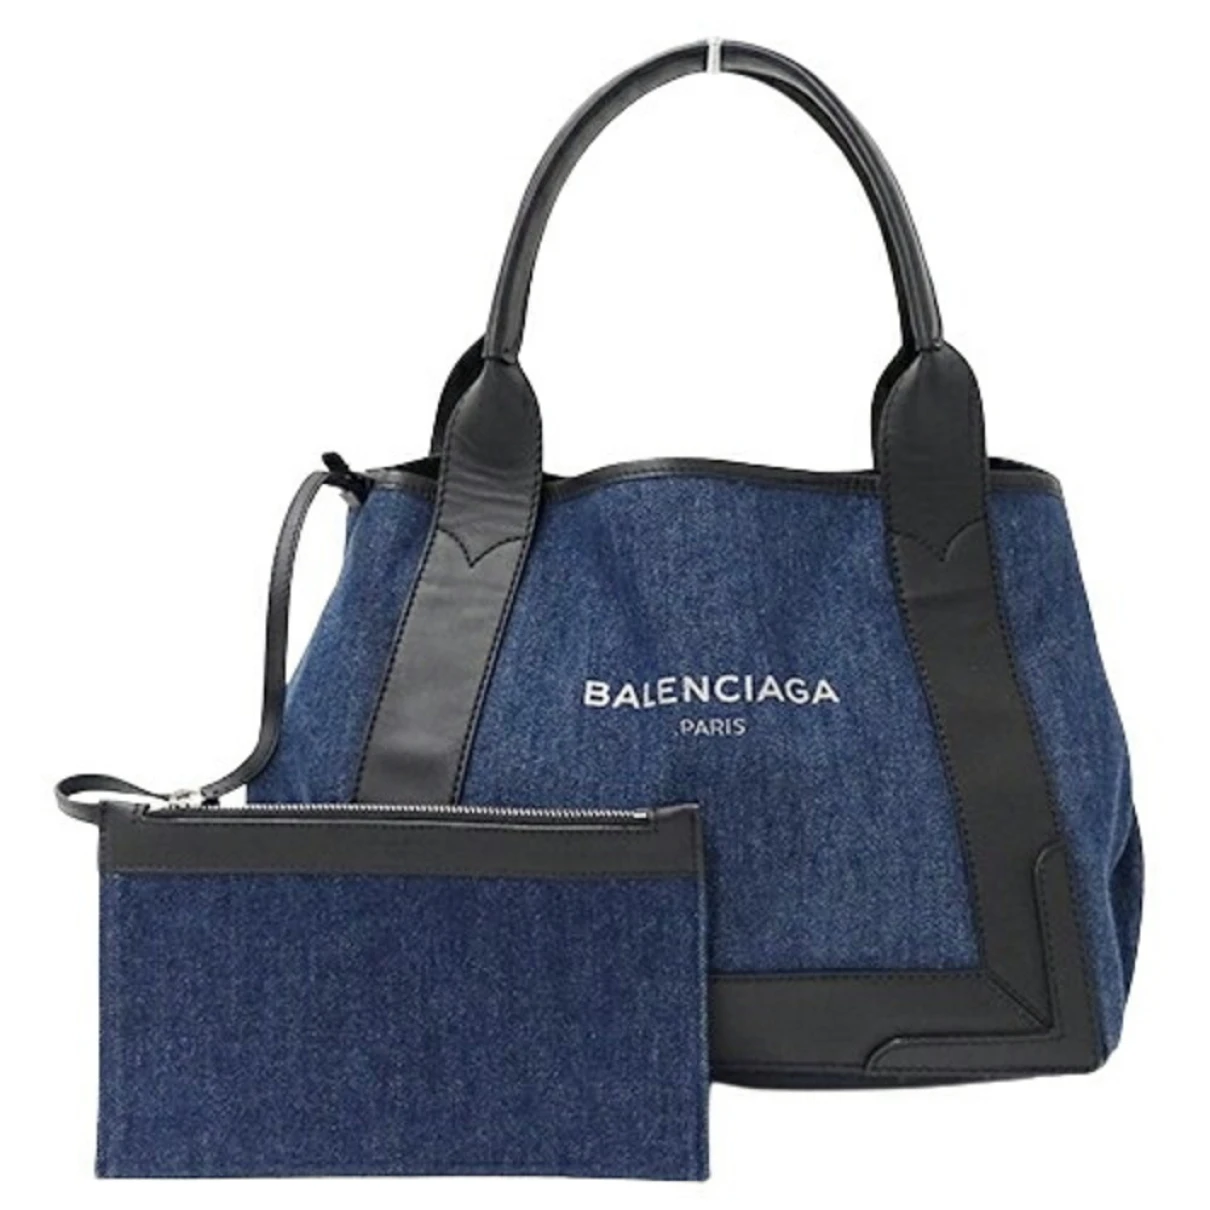 bags Balenciaga handbags Navy cabas for Female Denim - Jeans. Used condition